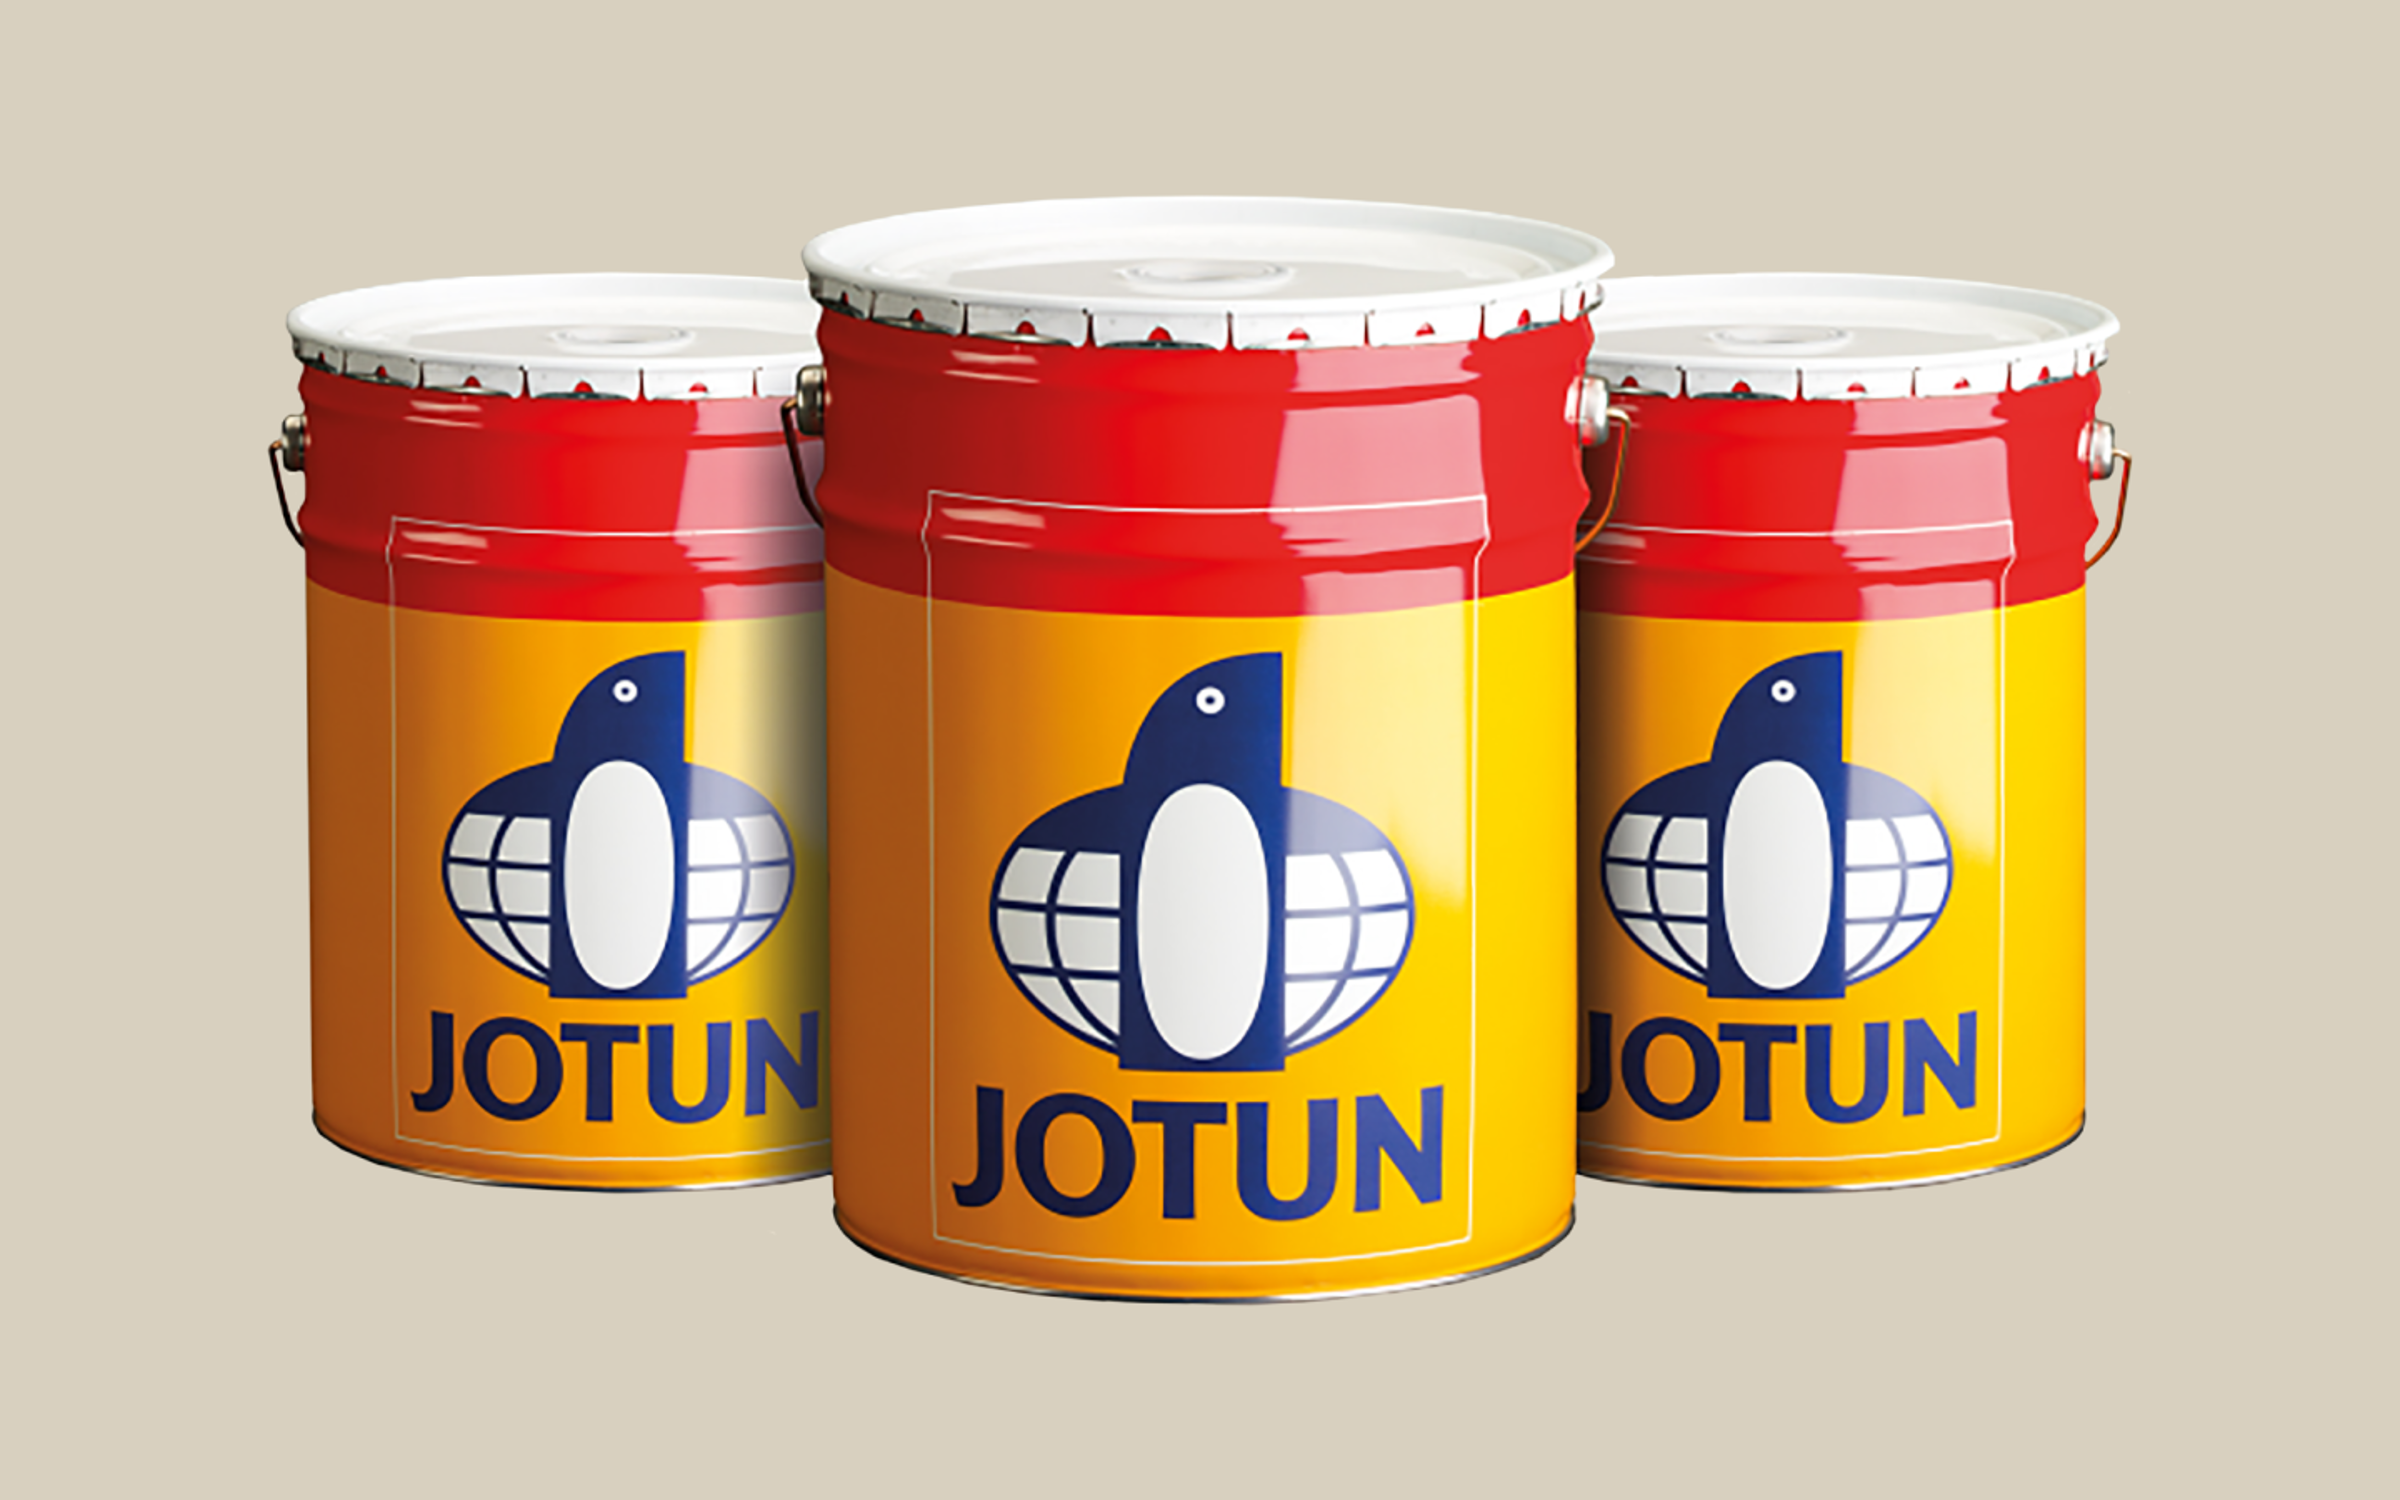 Jotun product can